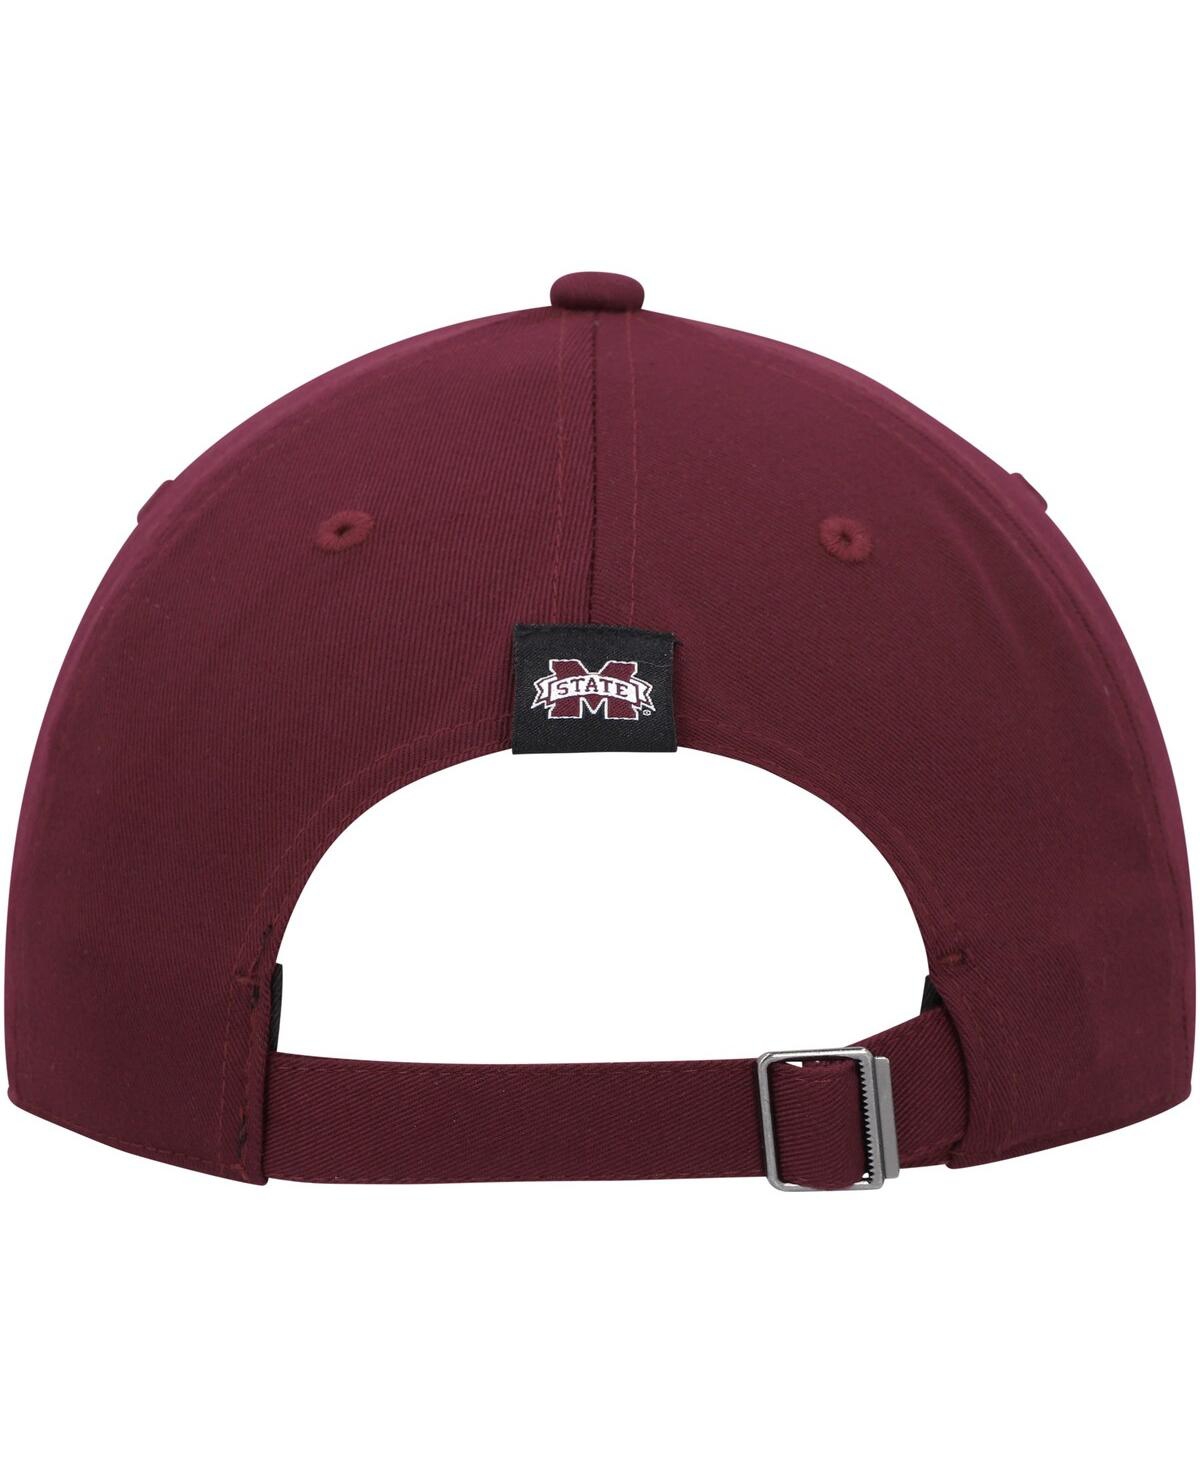 Shop Adidas Originals Men's Adidas Maroon Mississippi State Bulldogs Slouch Adjustable Hat